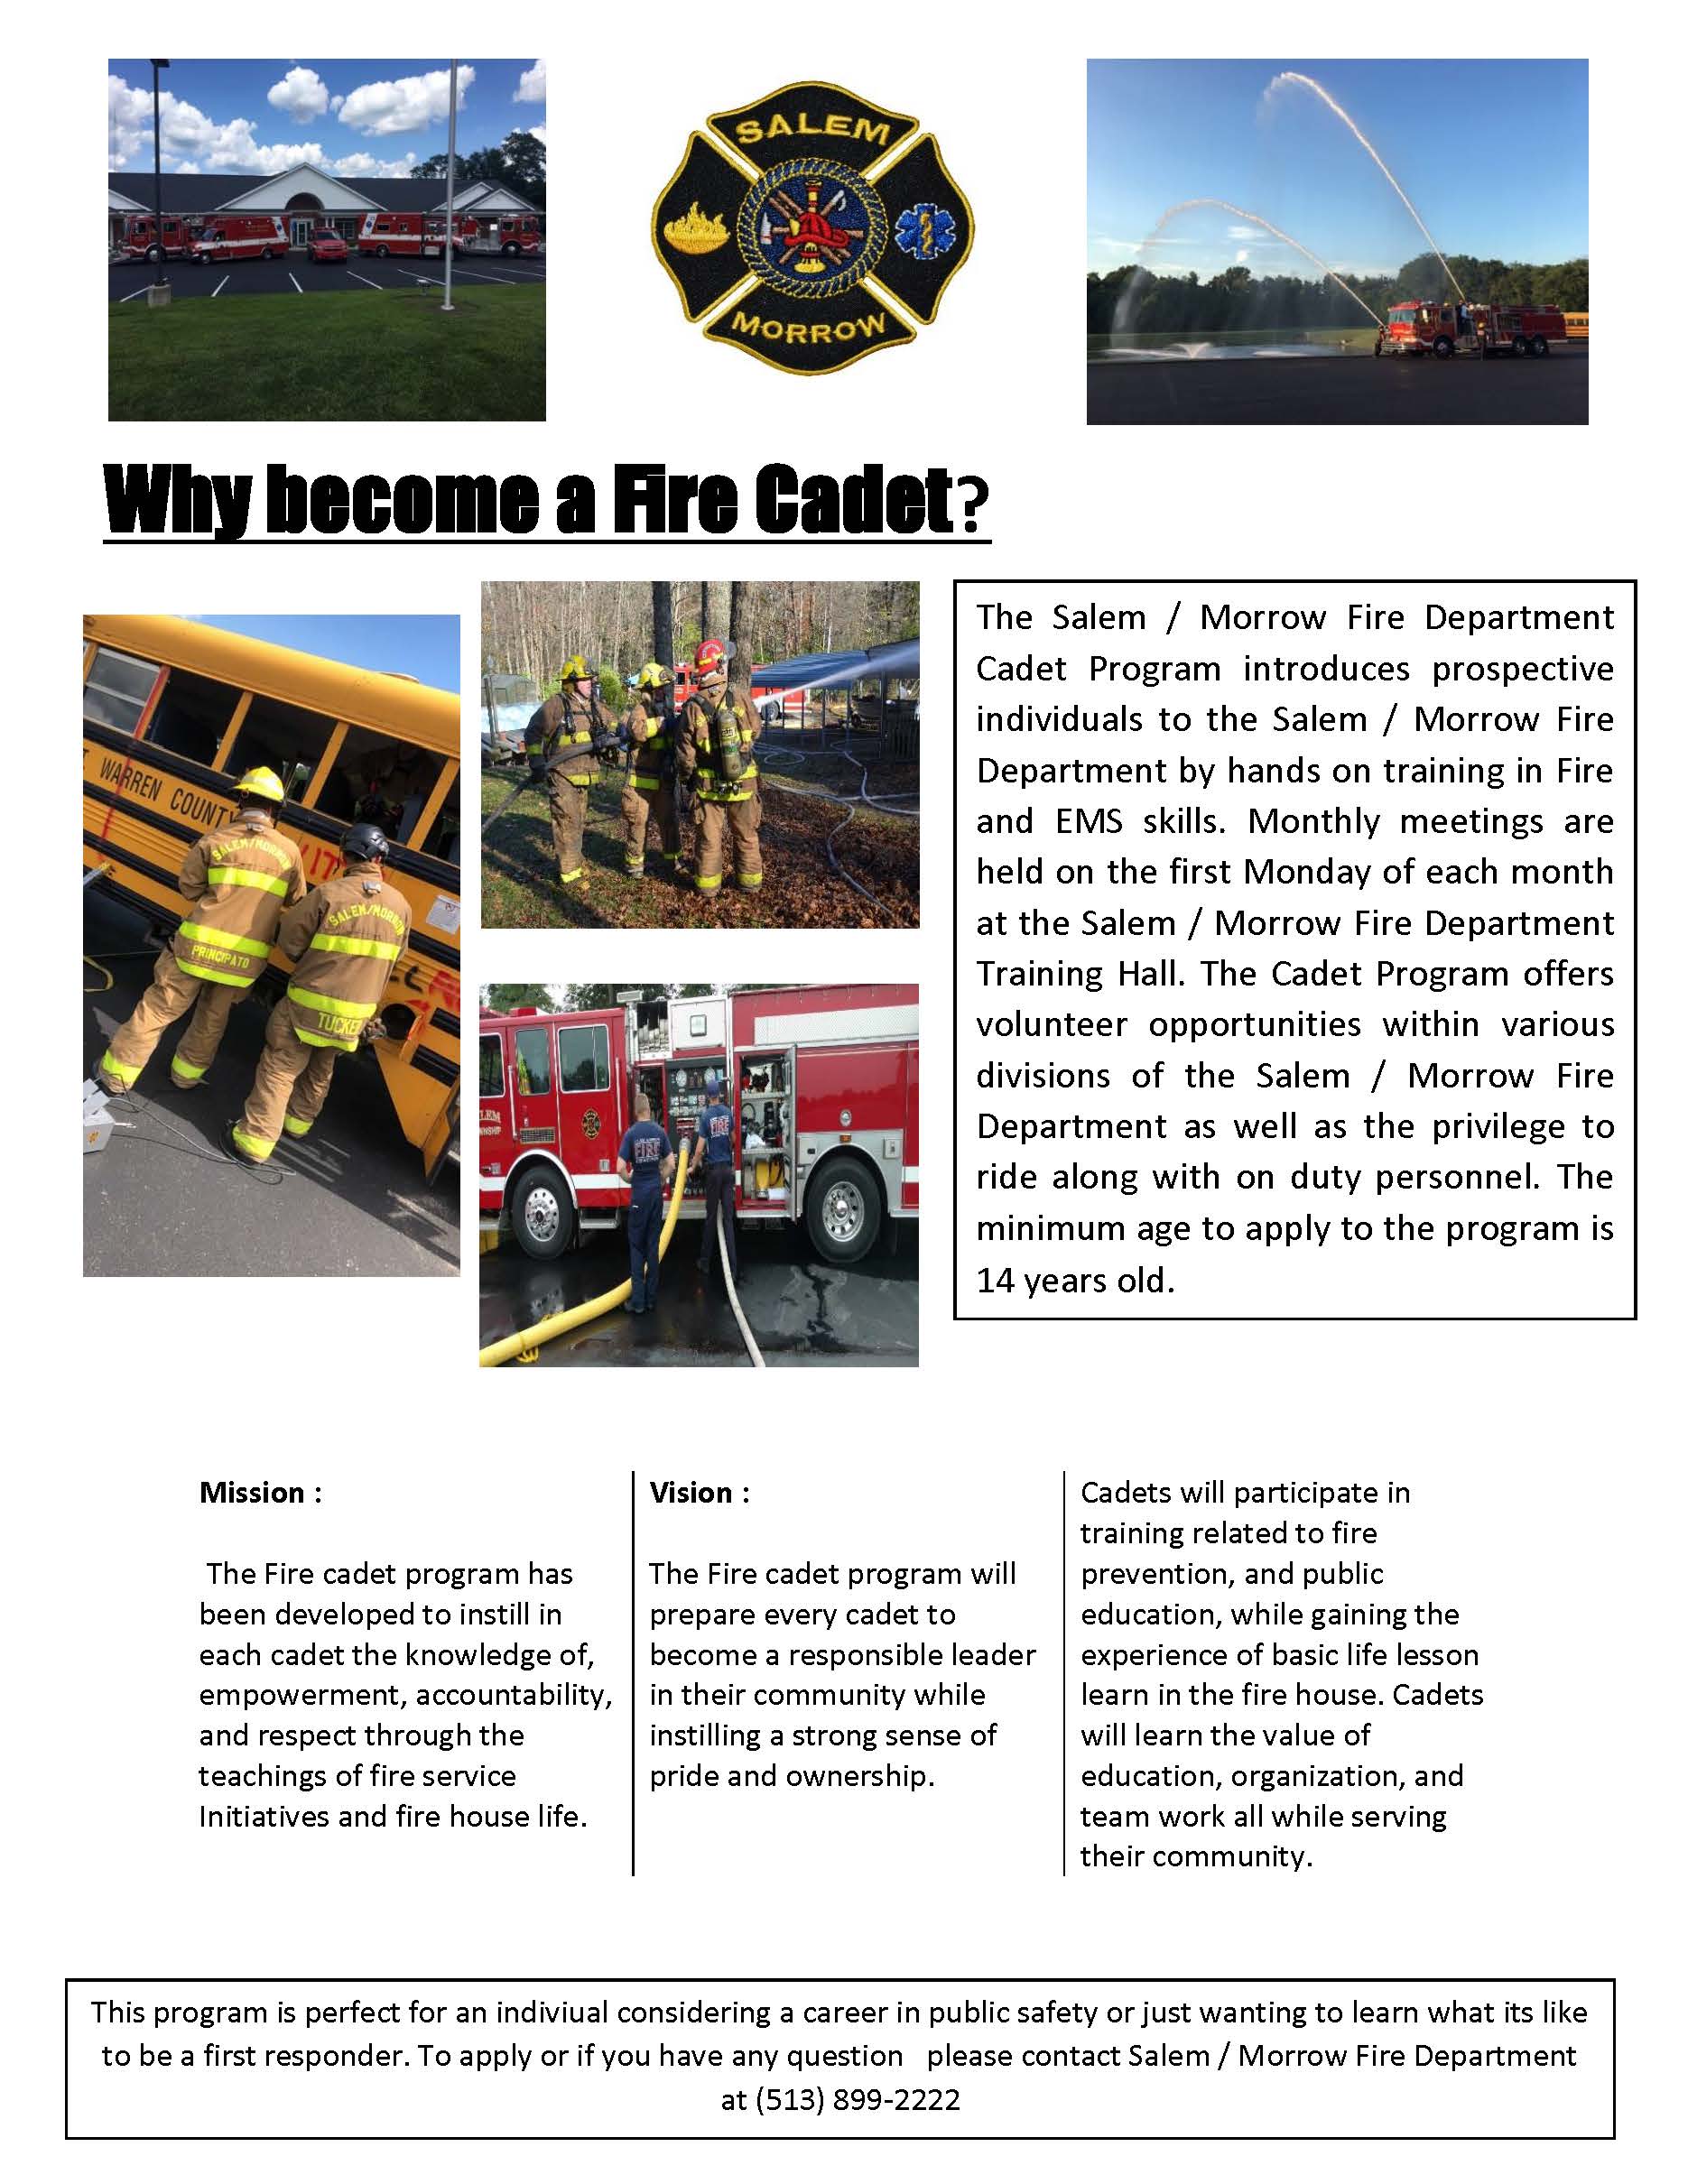 Salem / Morrow Fire Department Cadet Program